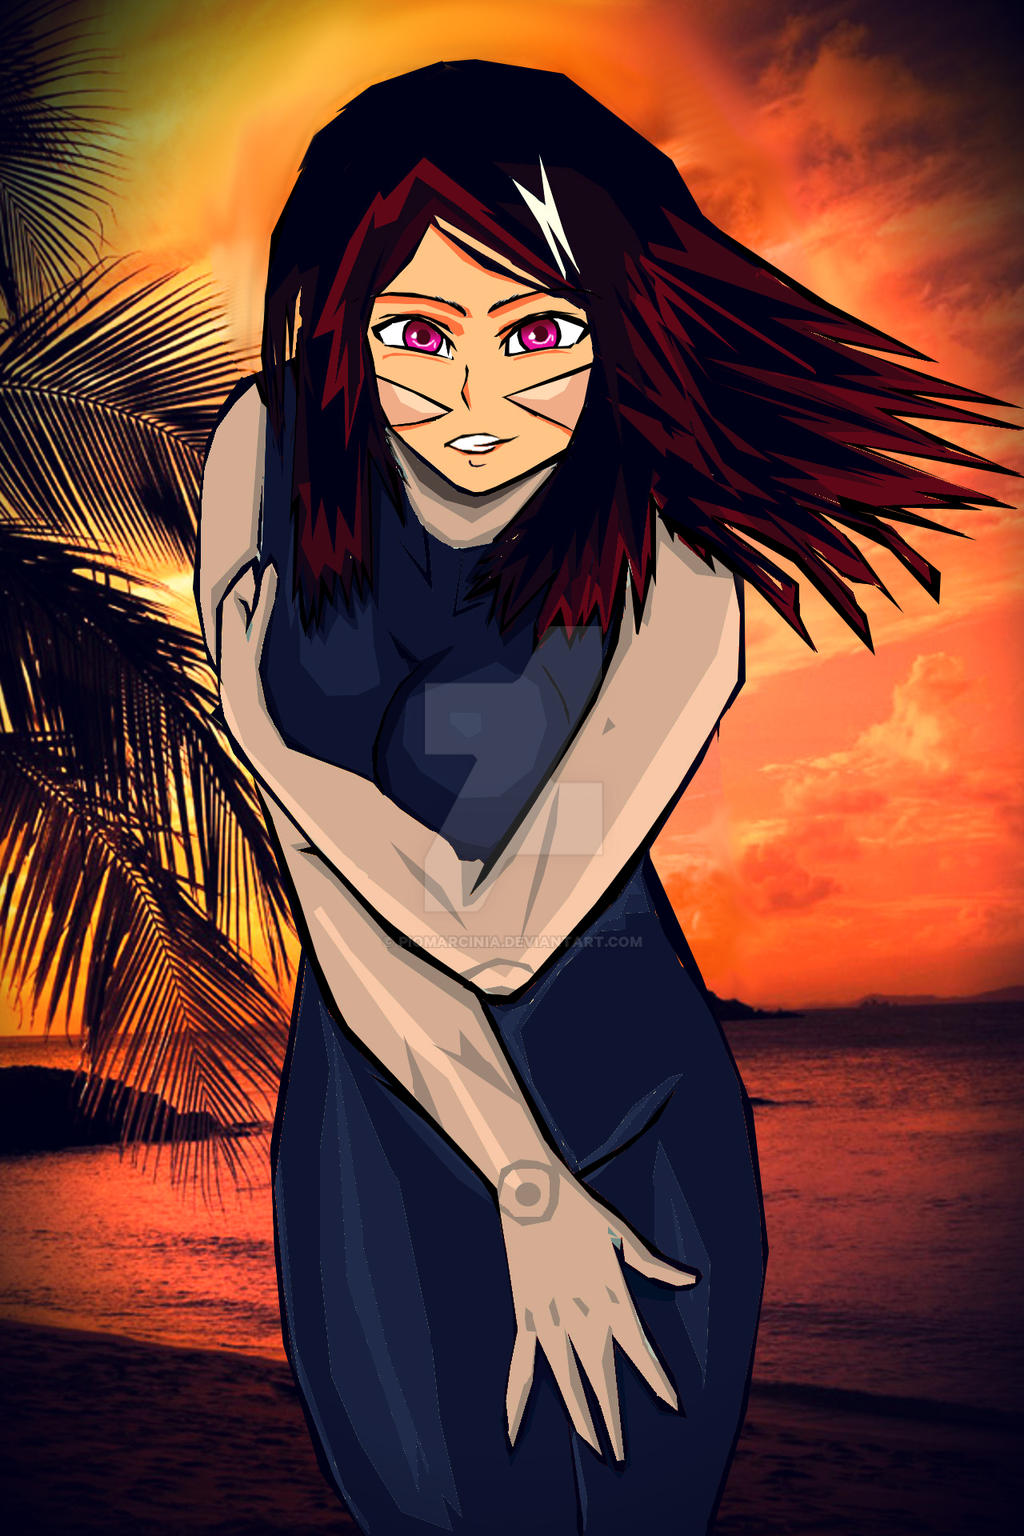 Girl and sunset beach (Anime Style) by piomarcinia on DeviantArt